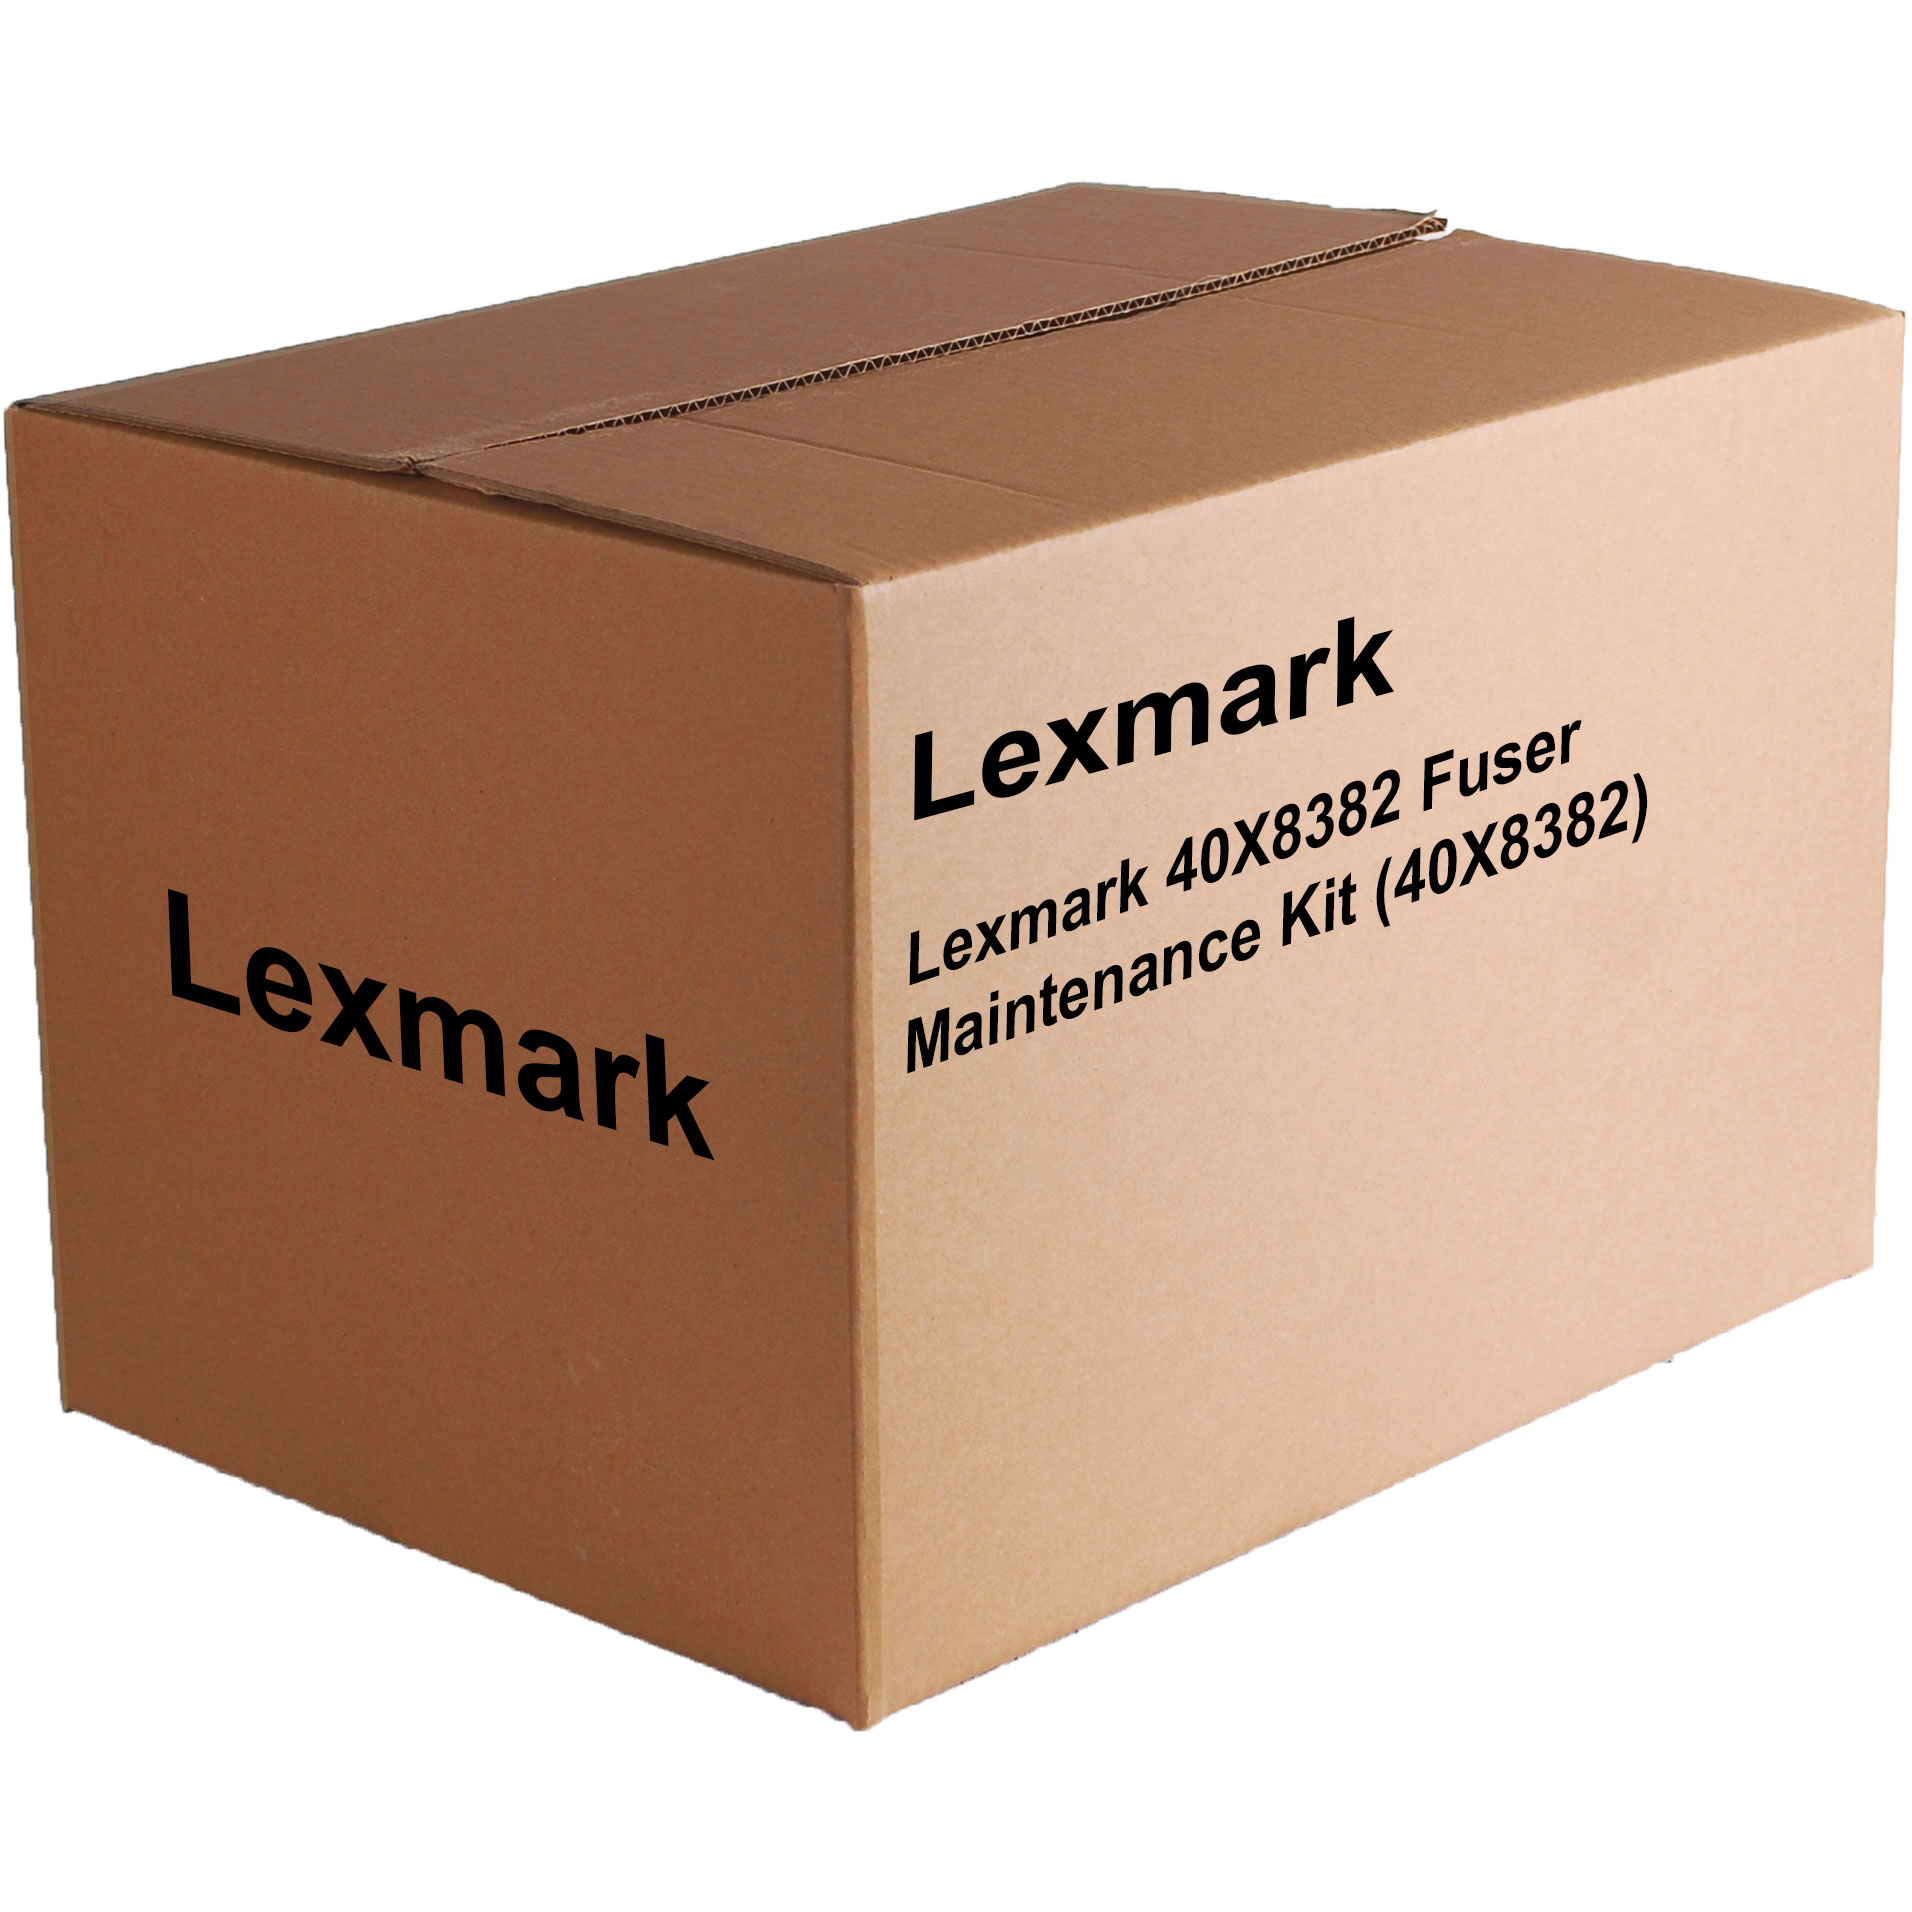 Original Lexmark 40X8382 Fuser Maintenance Kit (40X8382)